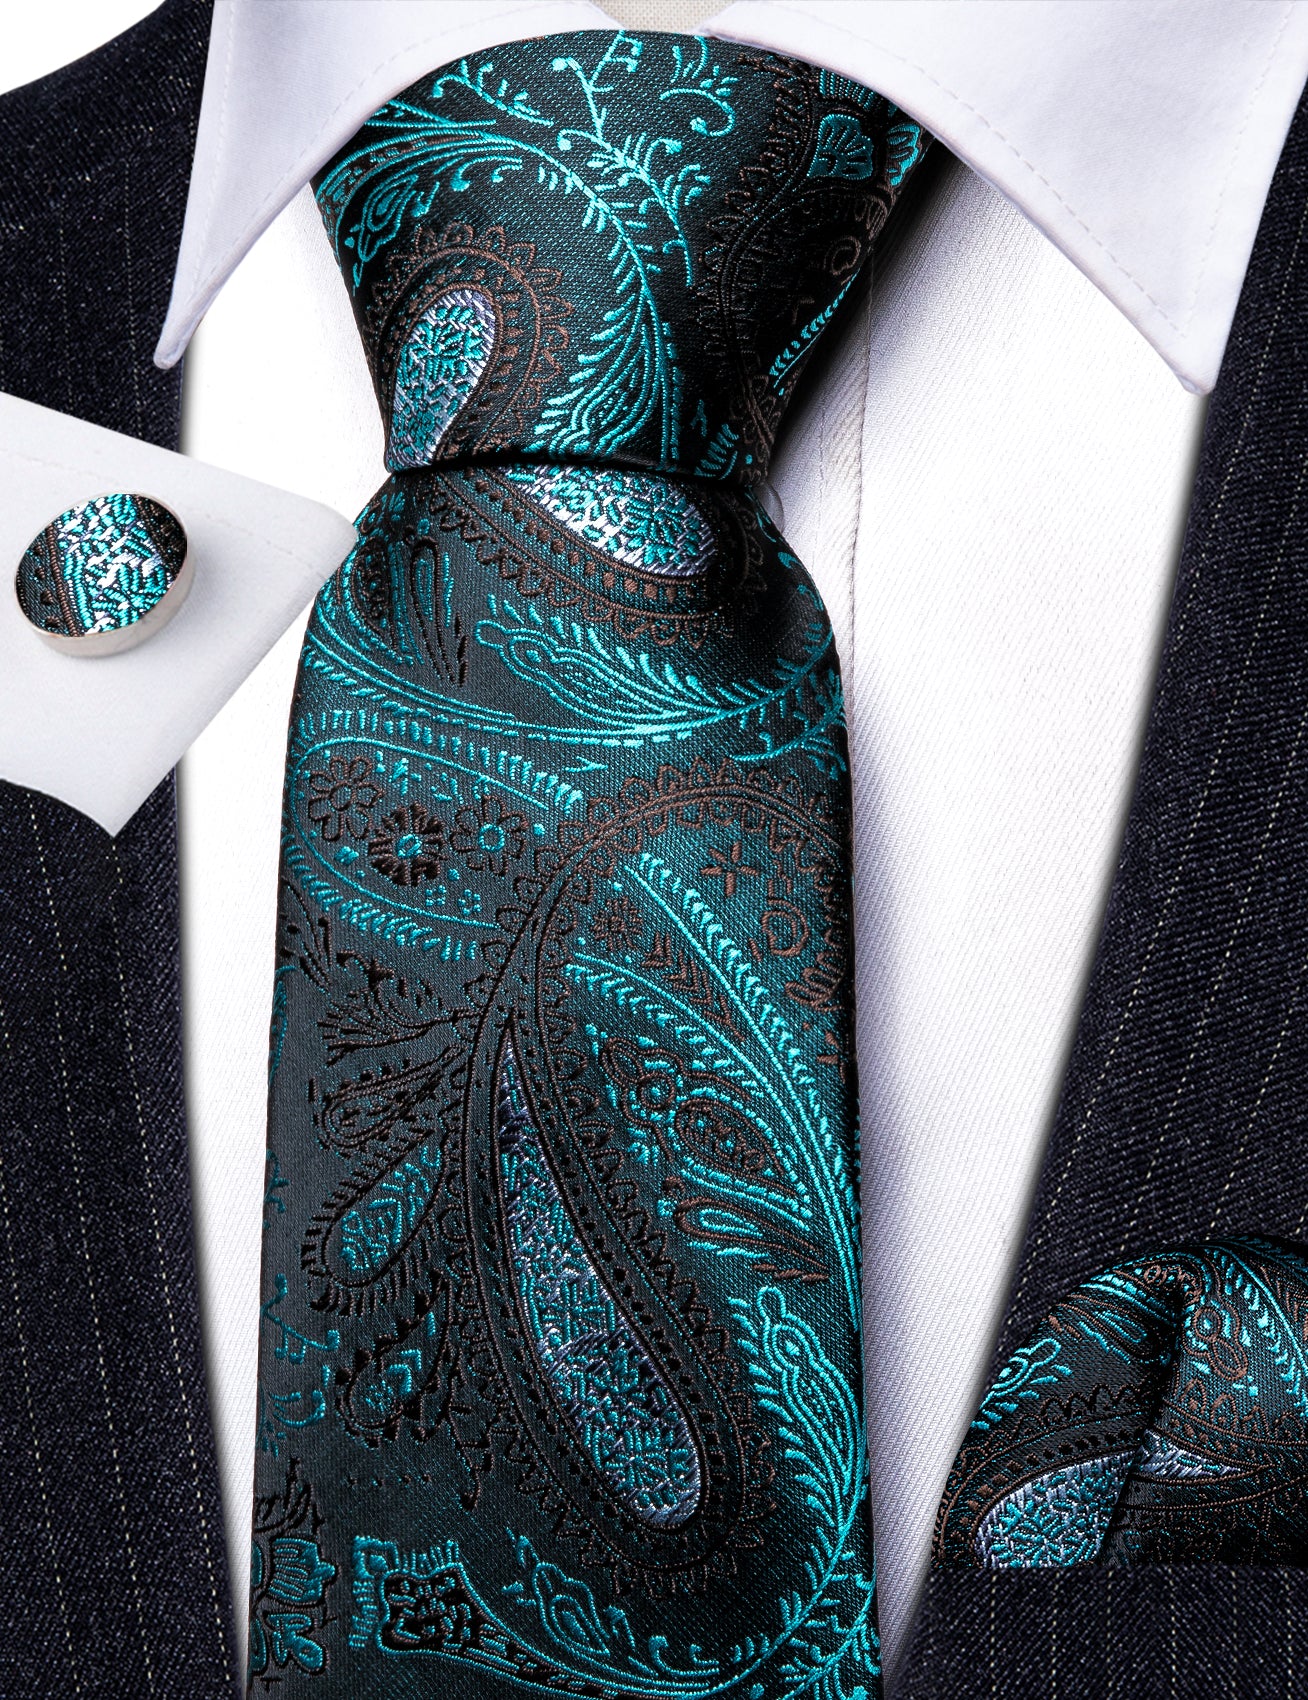 Fashion Blue Black Paisley Silk Tie Handkerchief Cufflinks Set